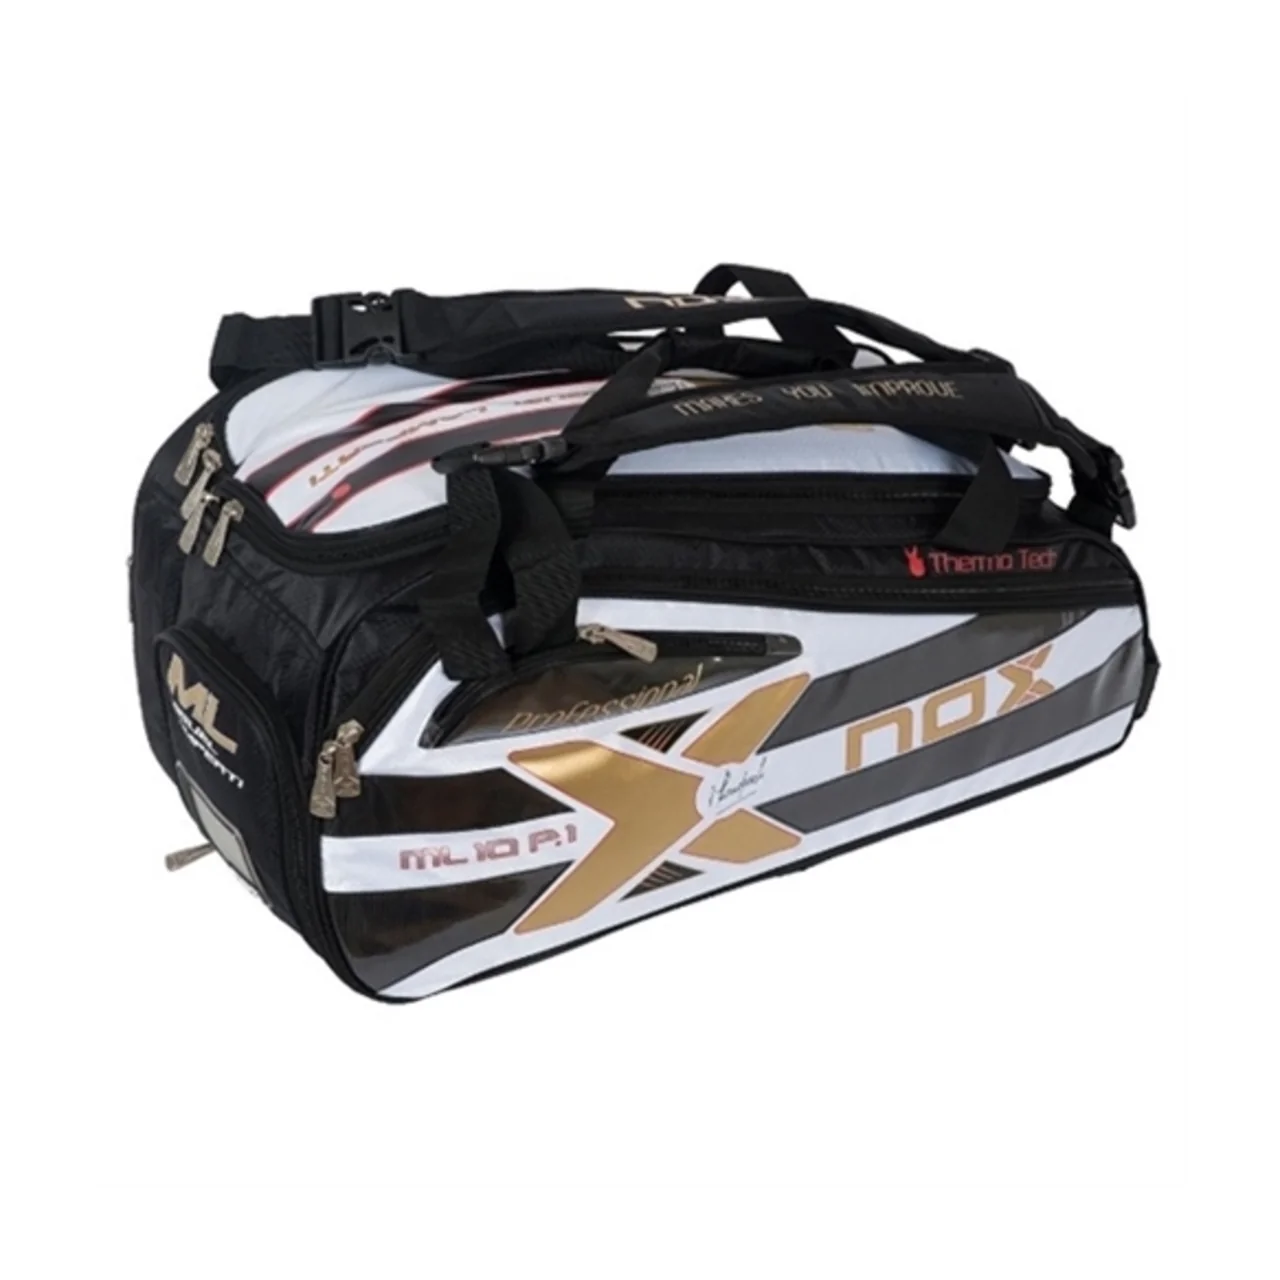 Nox Thermo ML 10 Pro Bag